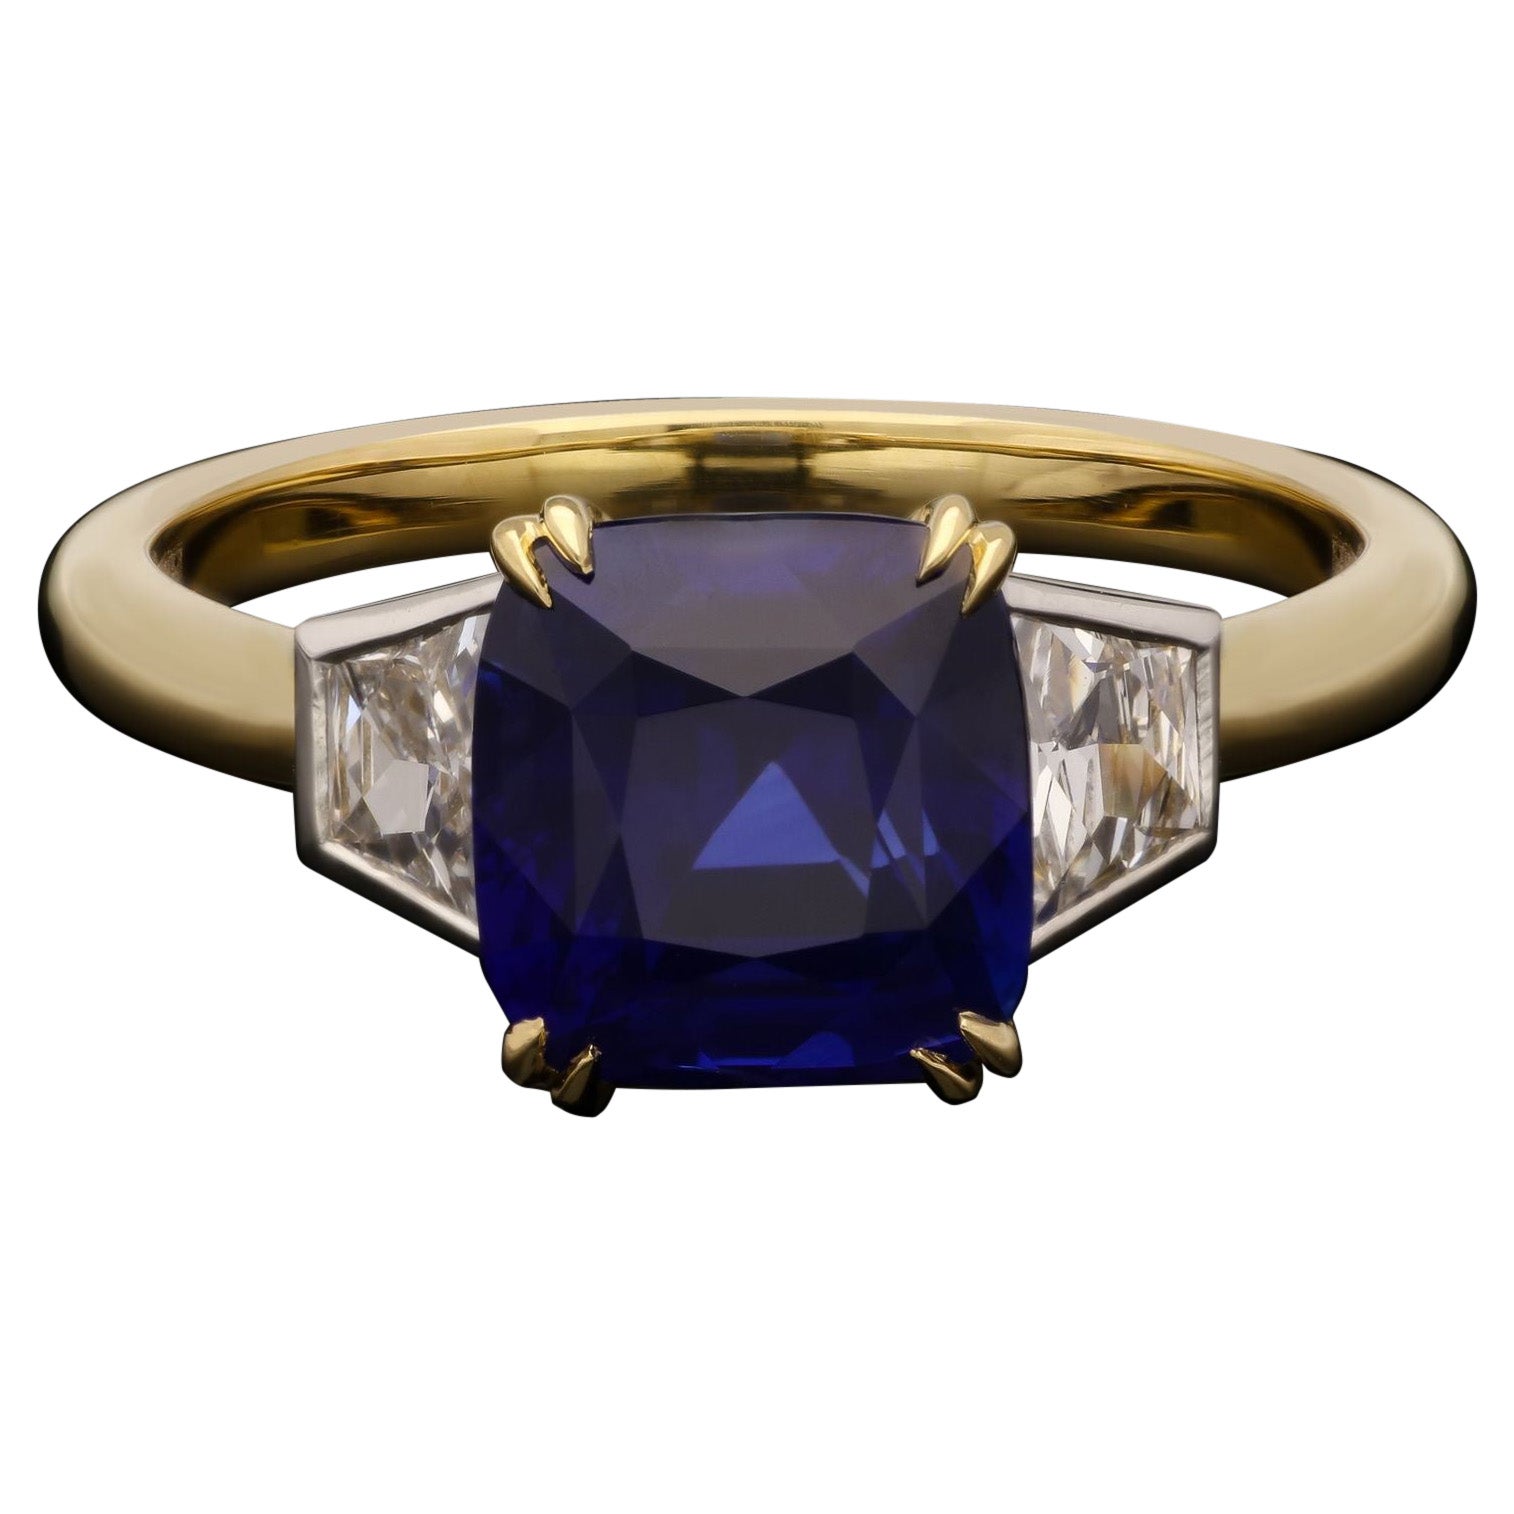 Hancocks 3.54ct Cushion Sapphire Ring with French Cut Diamond Shoulders